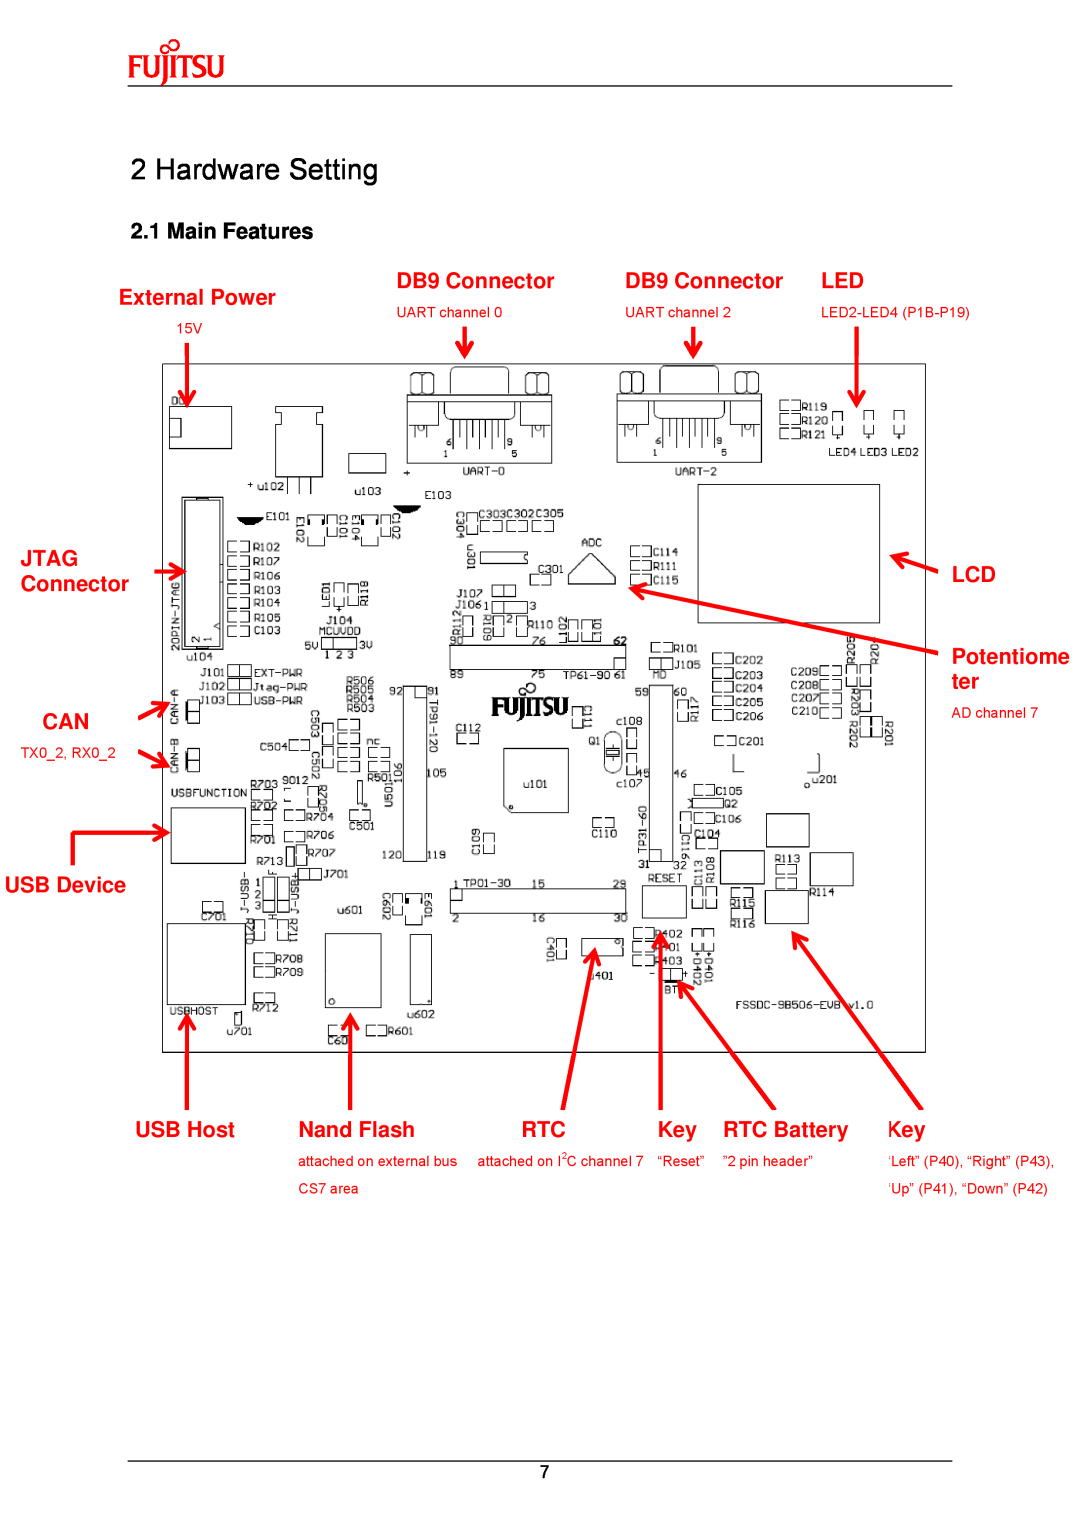 Fujitsu MB9B500 Series user manual Hardware Setting, AD channel 